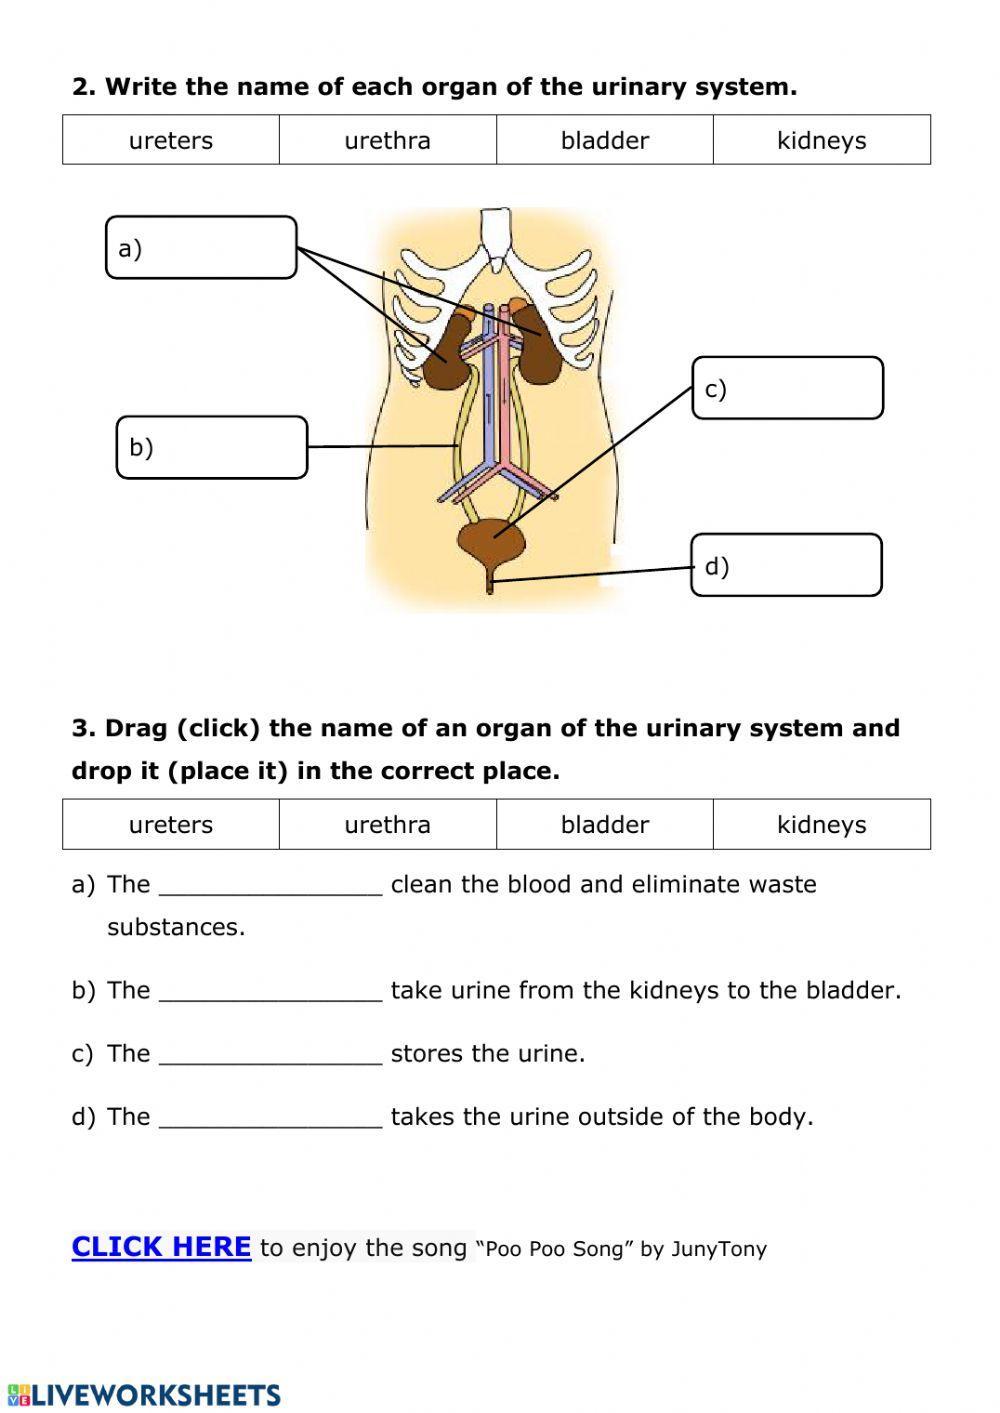 NUTRITION 6 - Urinary system